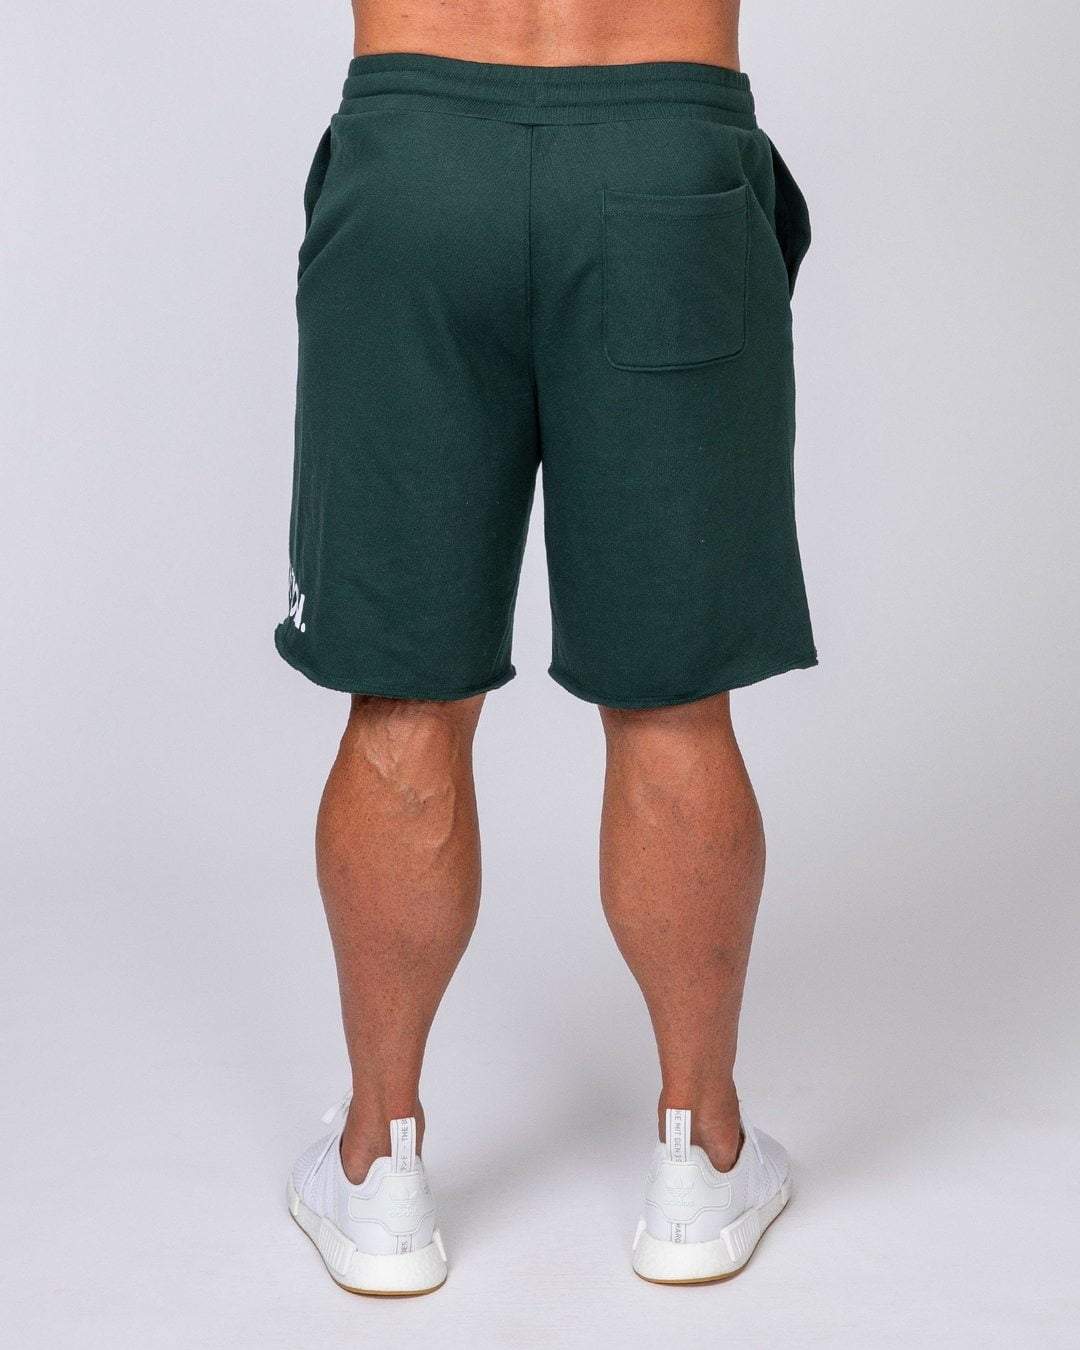 musclenation Mens Relaxed Shorts - Emerald Green